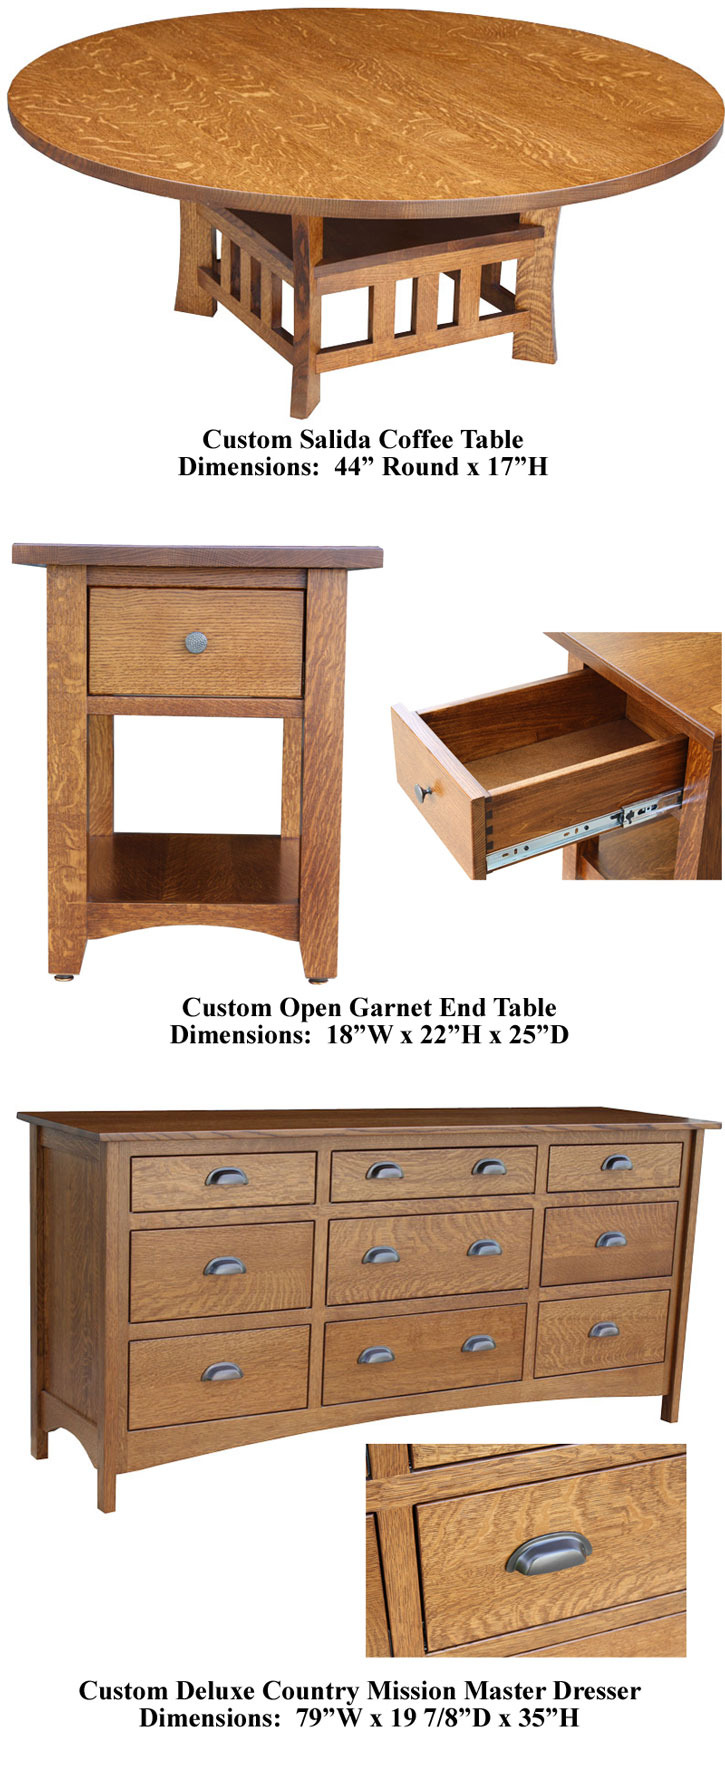 Salida Table, Open Garnet End Table and Master Dresser